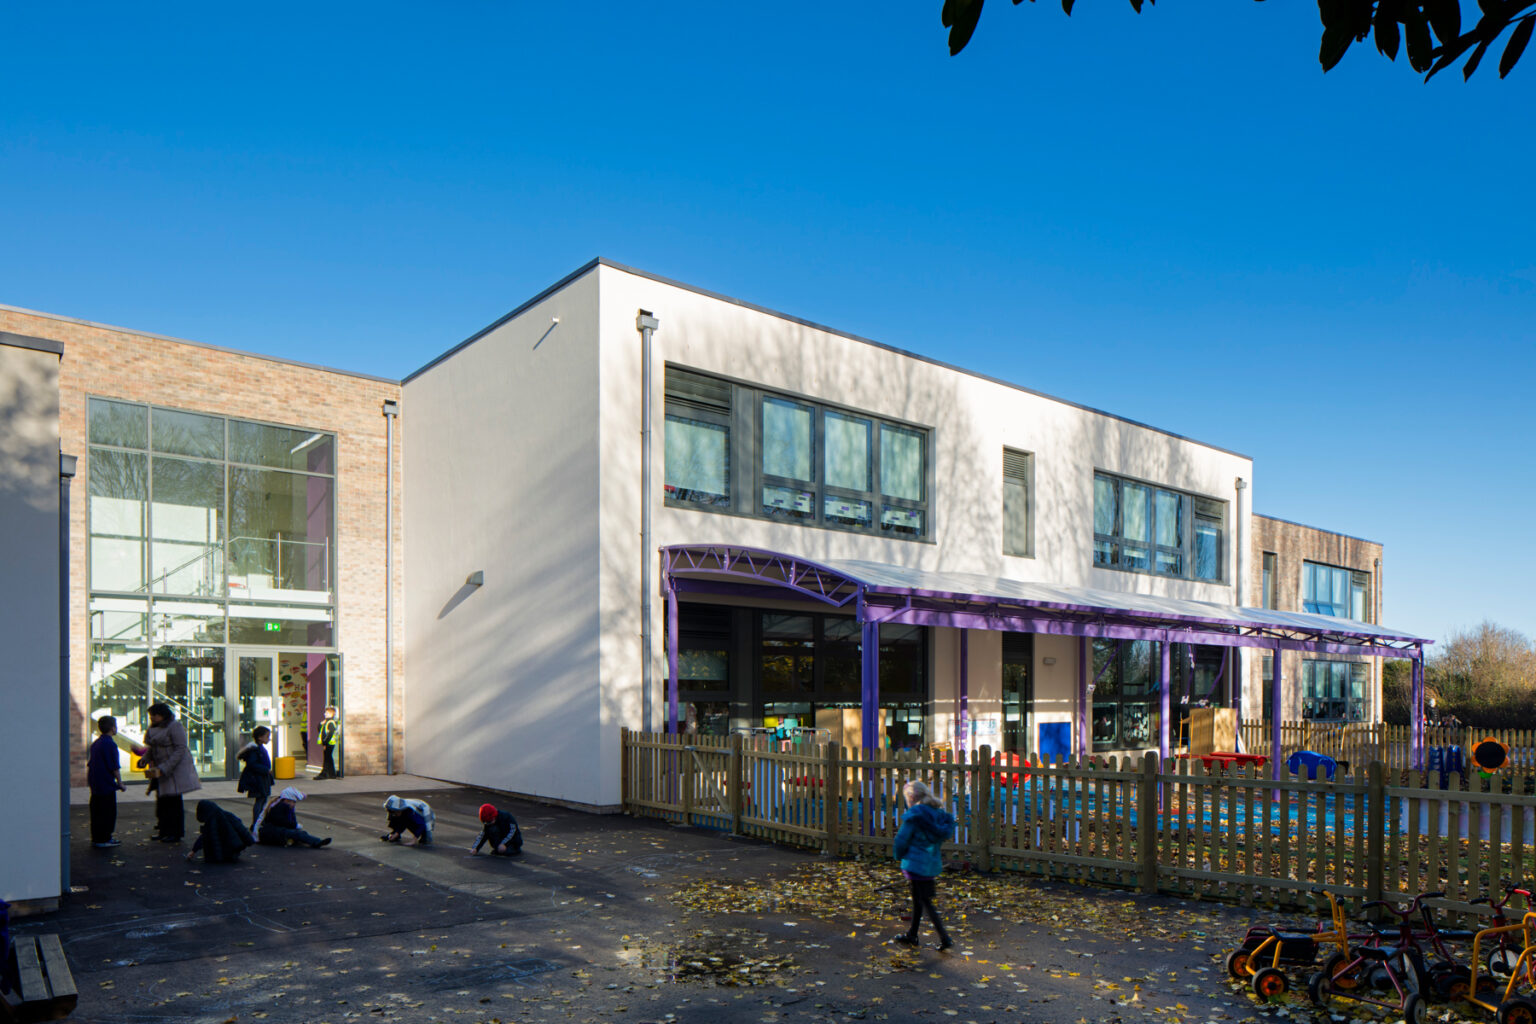 Canterbury Primary School